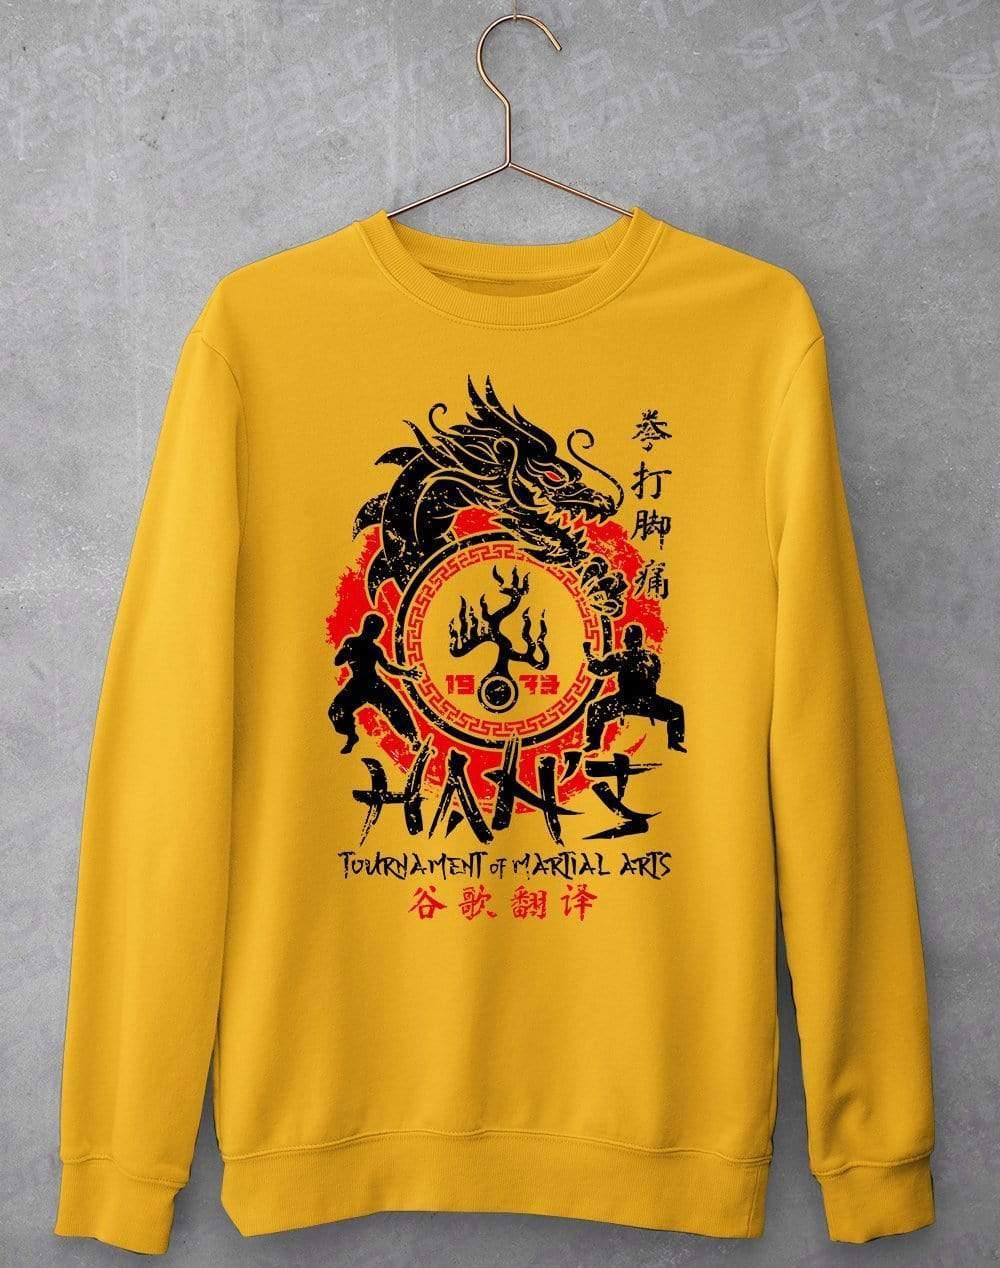 Han's Tournament of Martial Arts Sweatshirt XS / Gold  - Off World Tees